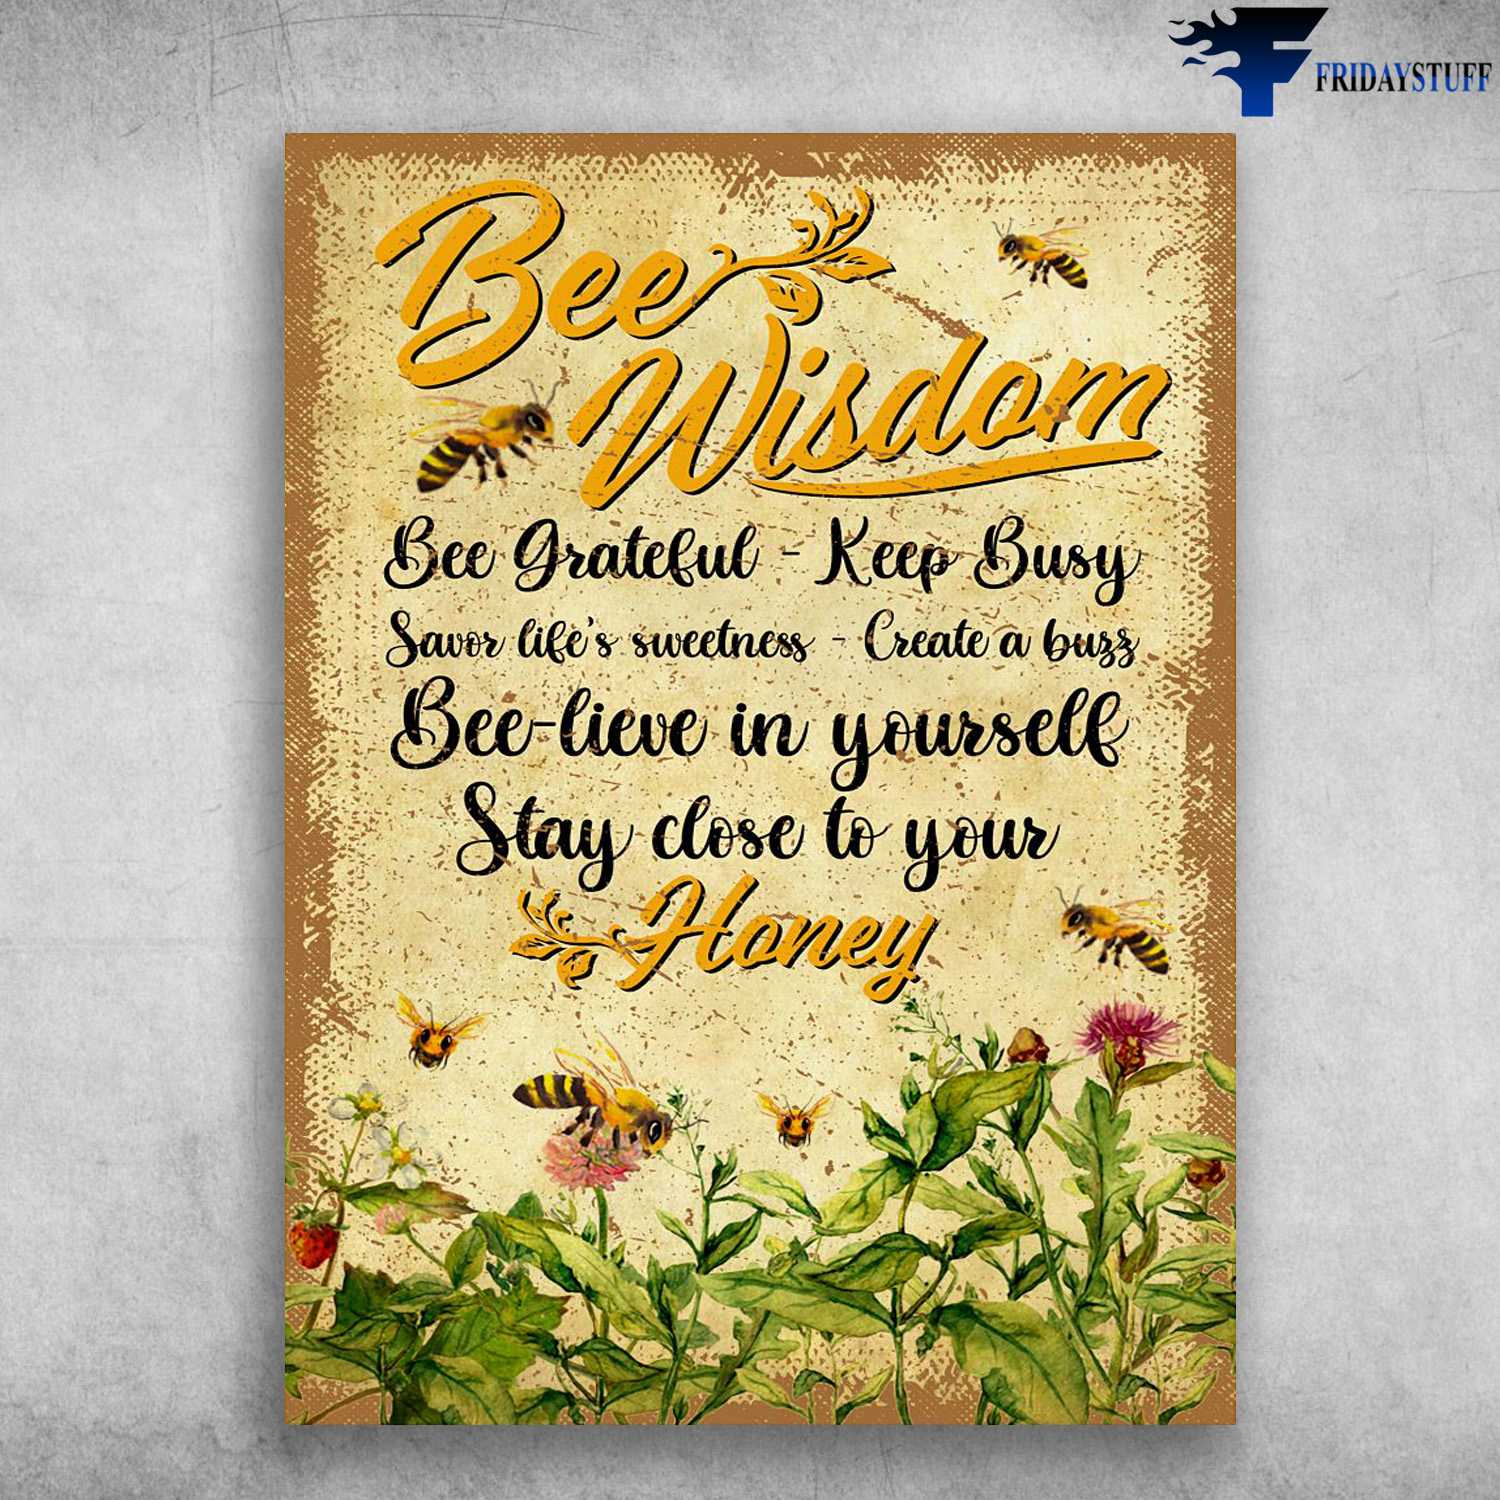 Beekeeper Poster, Bee Wisdp, Bee Grateful, Keep Busy, Savor Life's Sweetness, Create A Buzz